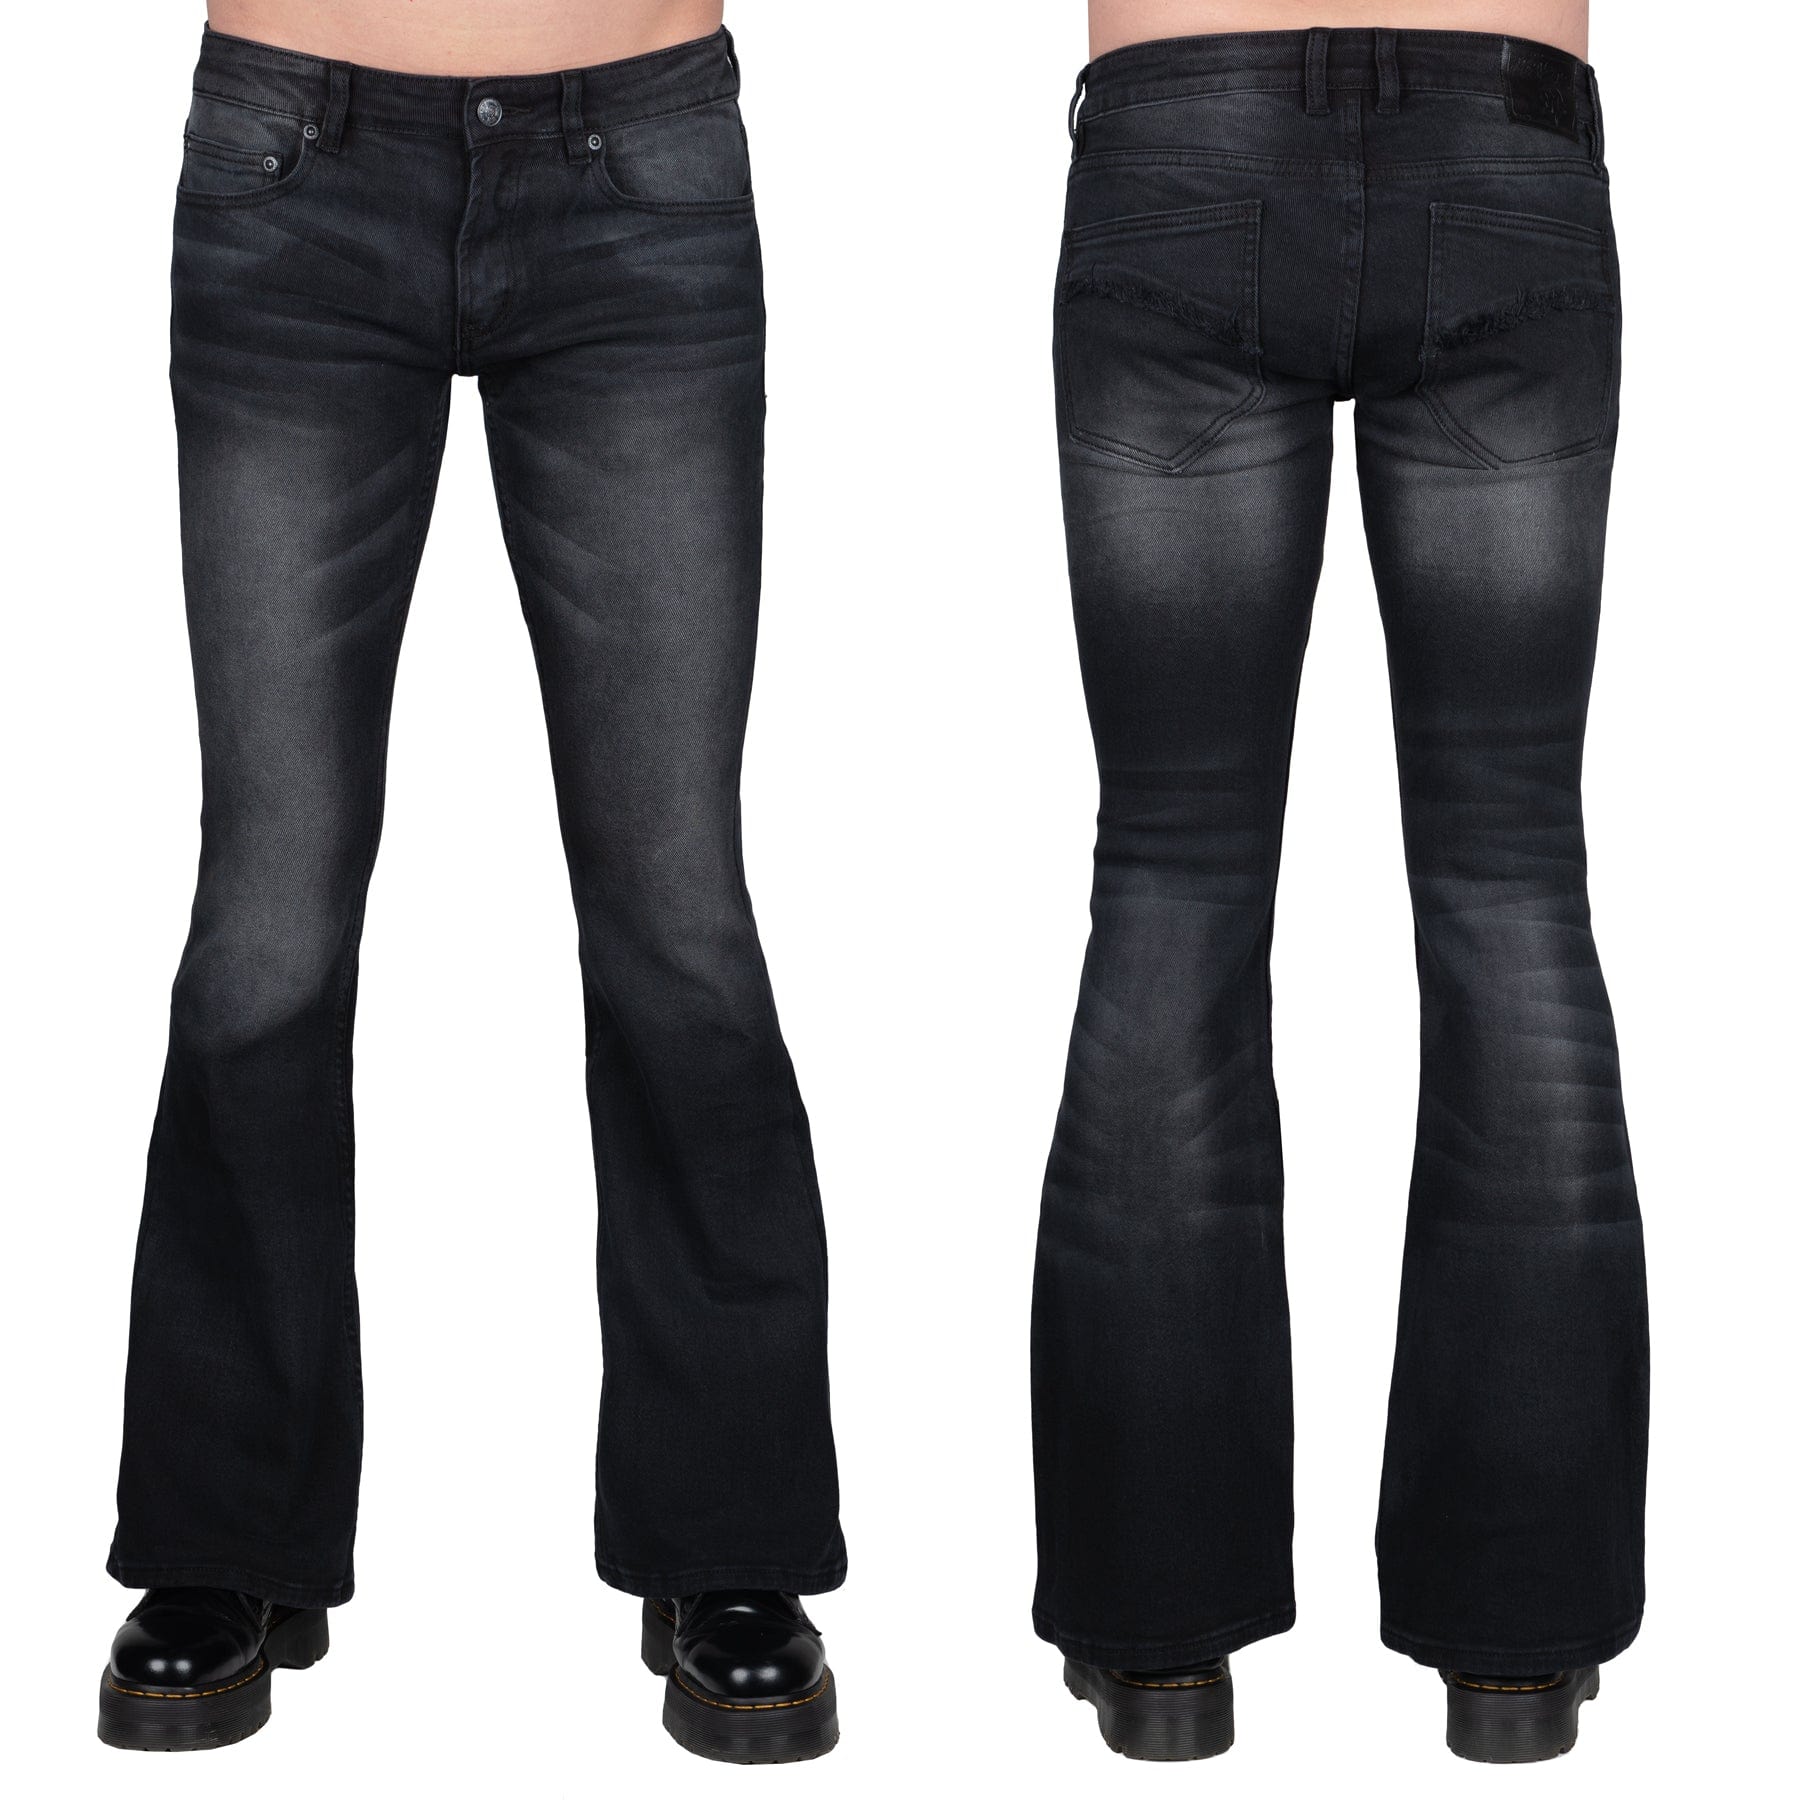 Essentials Collection Pants Starchaser Jeans - Vintage Black